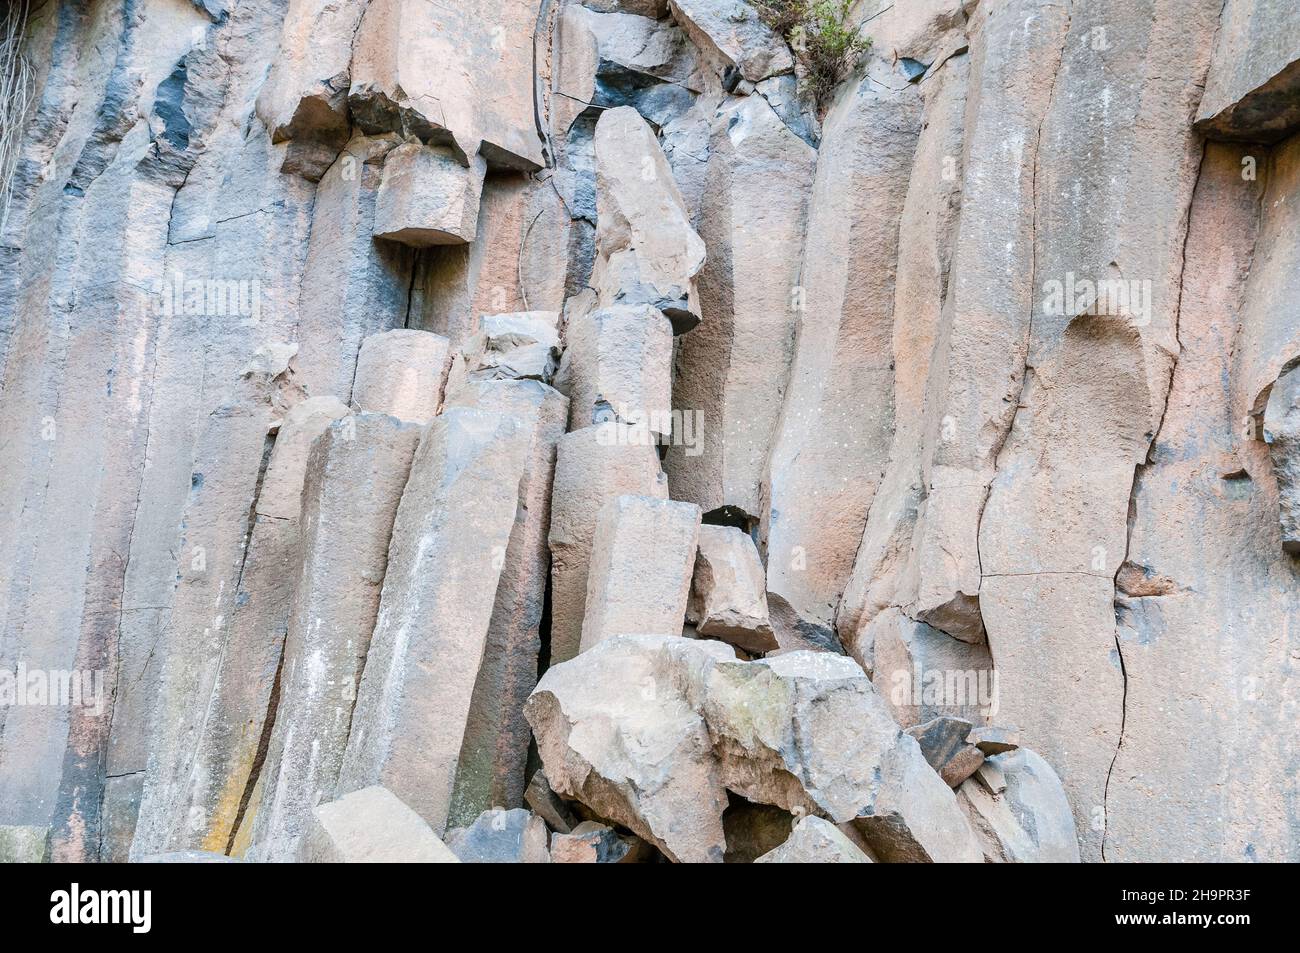 vertical lava columns, old lava flow, basalt column, hexagonal shape, Sant Joan les Fonts, Garrotxa, Catalonia, Spain Stock Photo